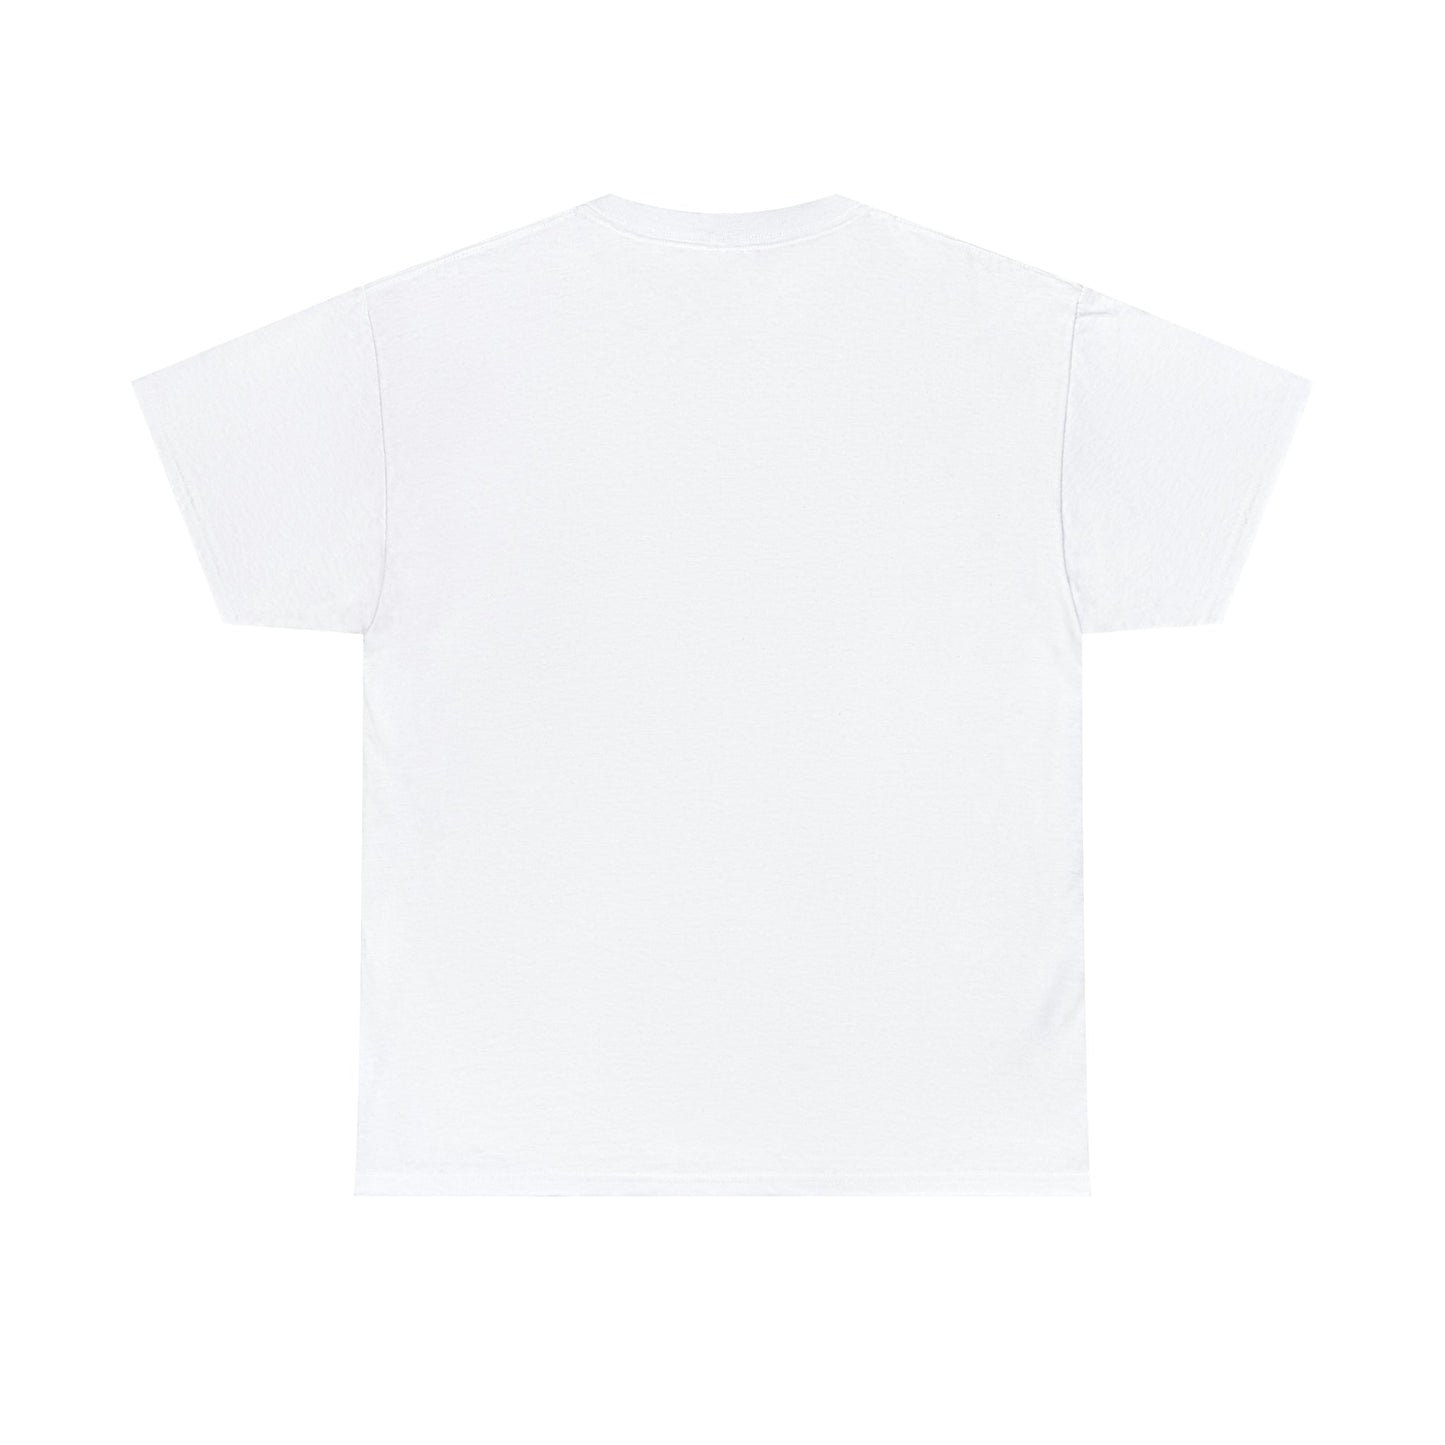 Stay Positive Short Sleeve Cotton T-Shirt - numonet